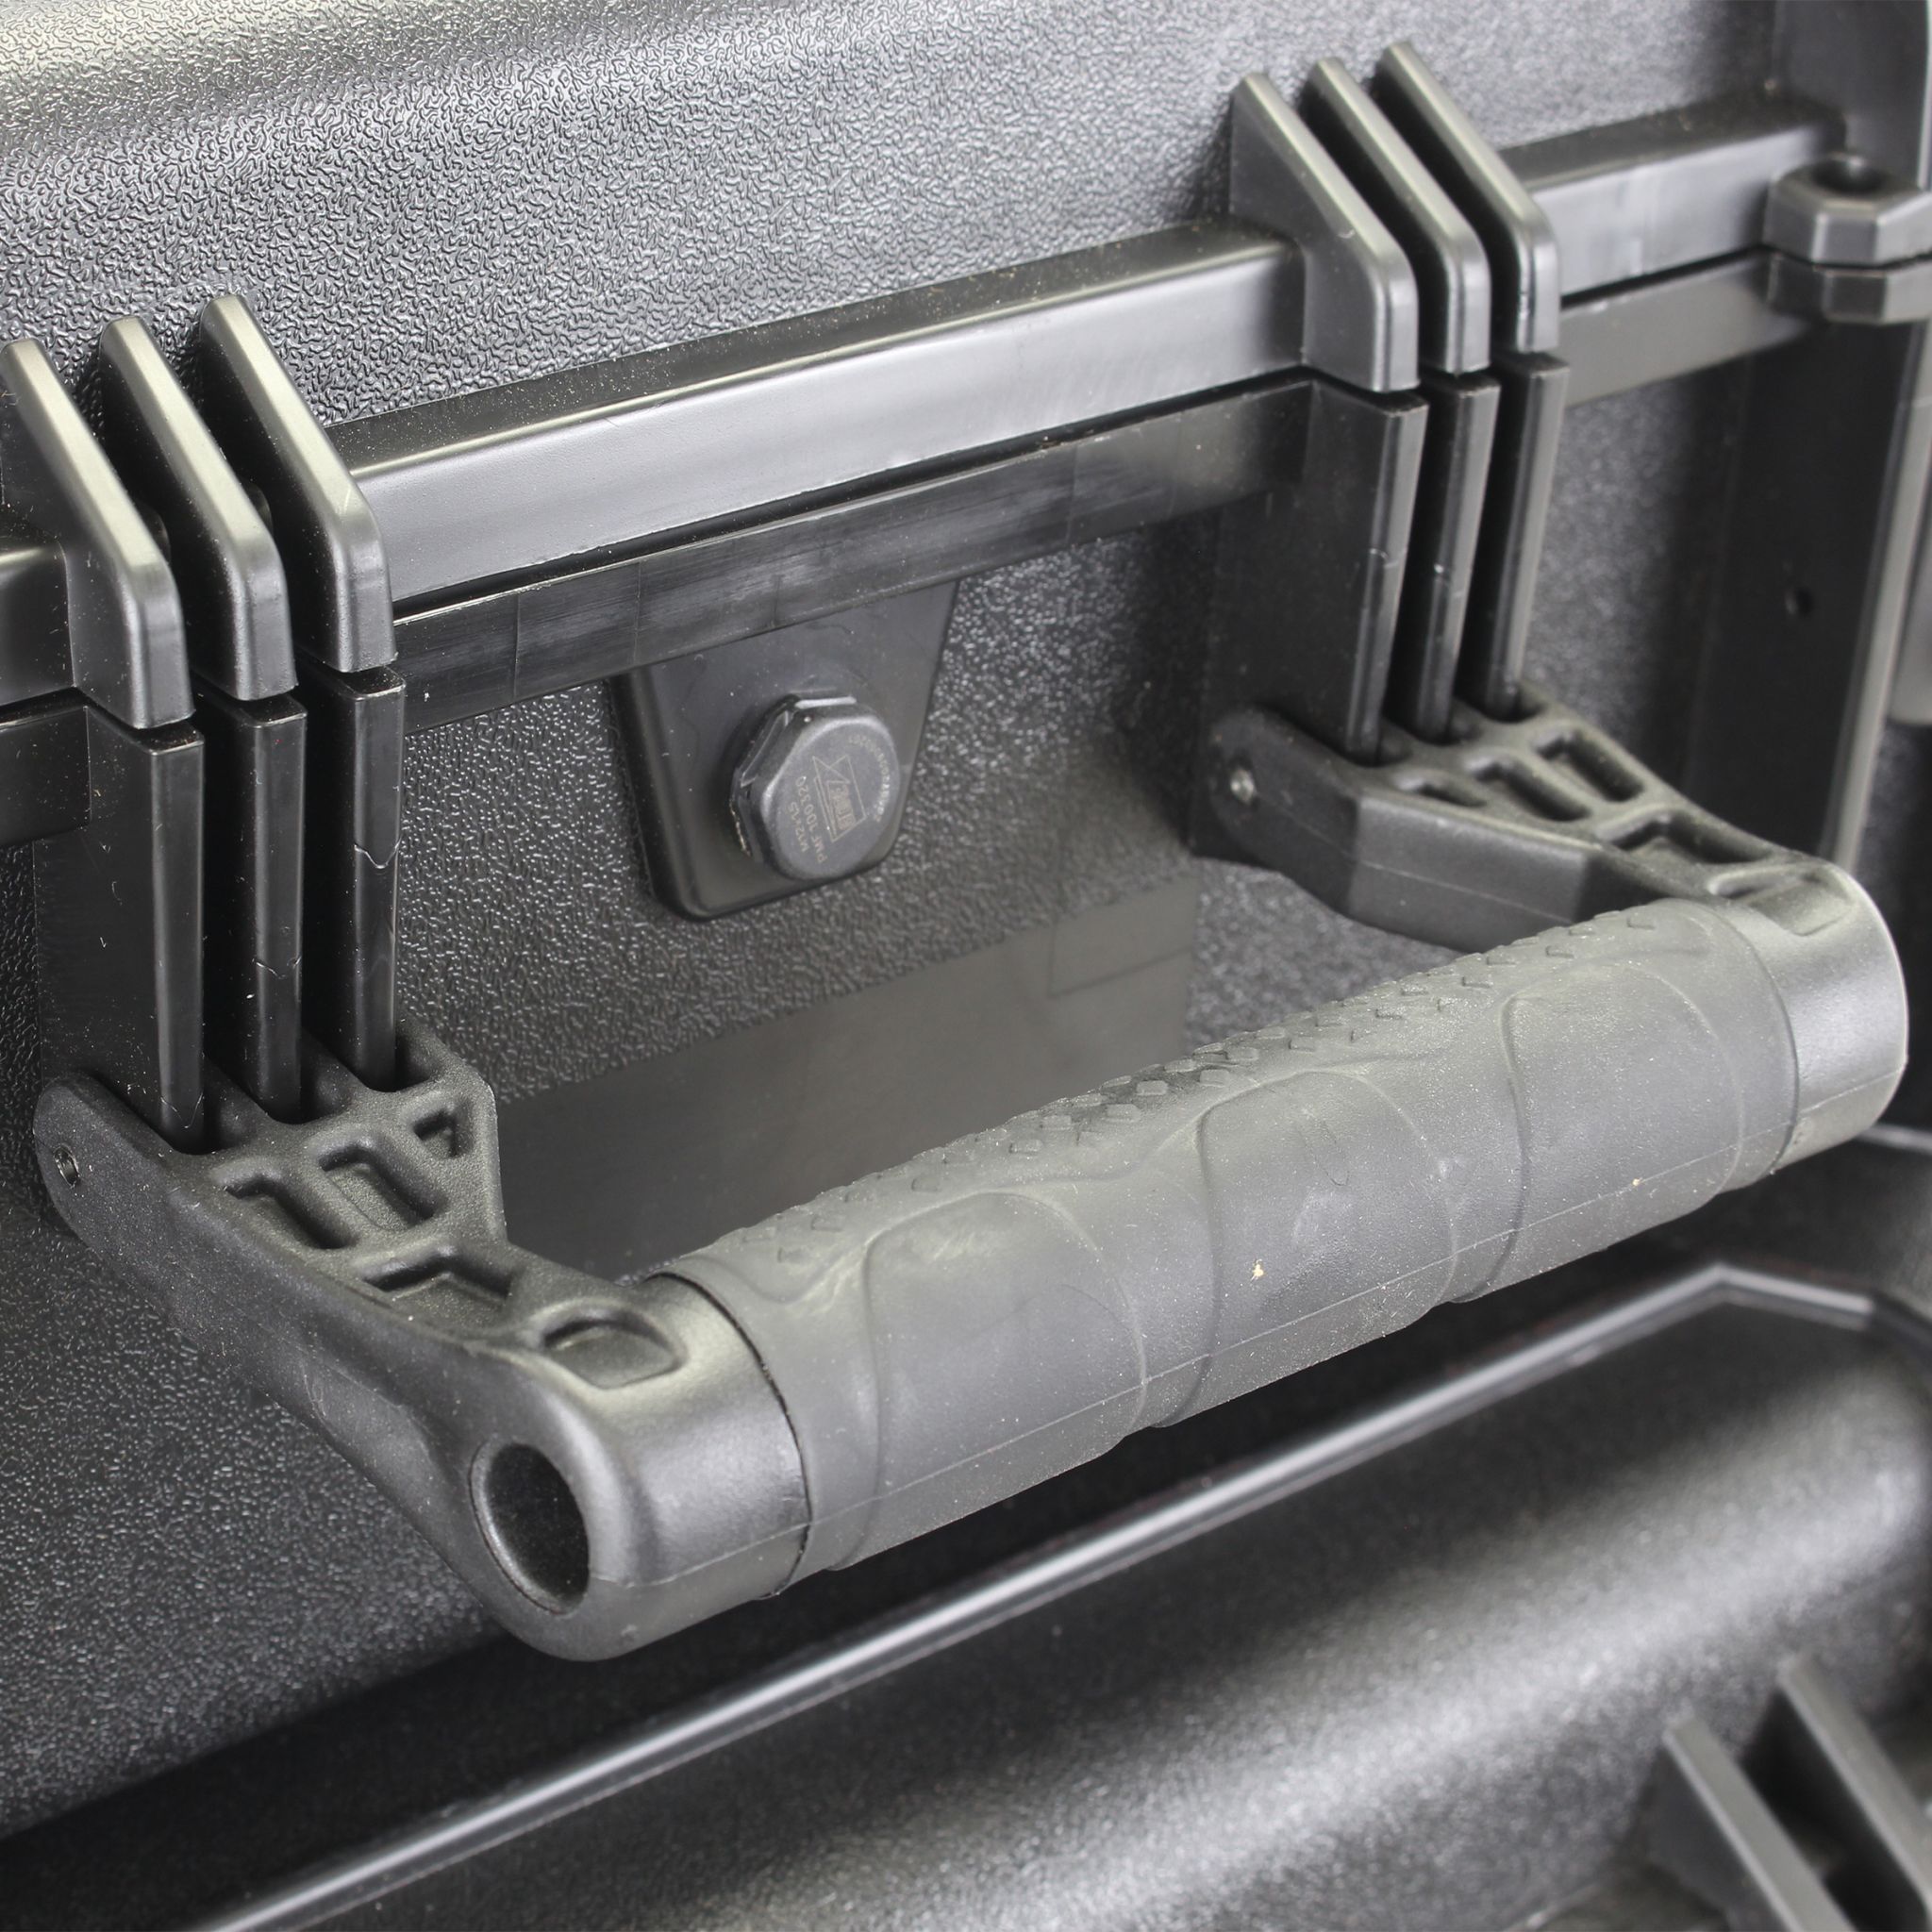 Go Rhino XG181407F - Xventure Gear Hard Case With Foam - Medium Box 18" - Textured Black